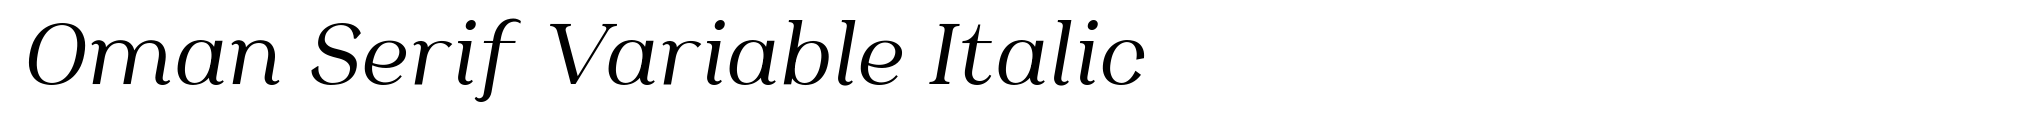 Oman Serif Variable Italic image